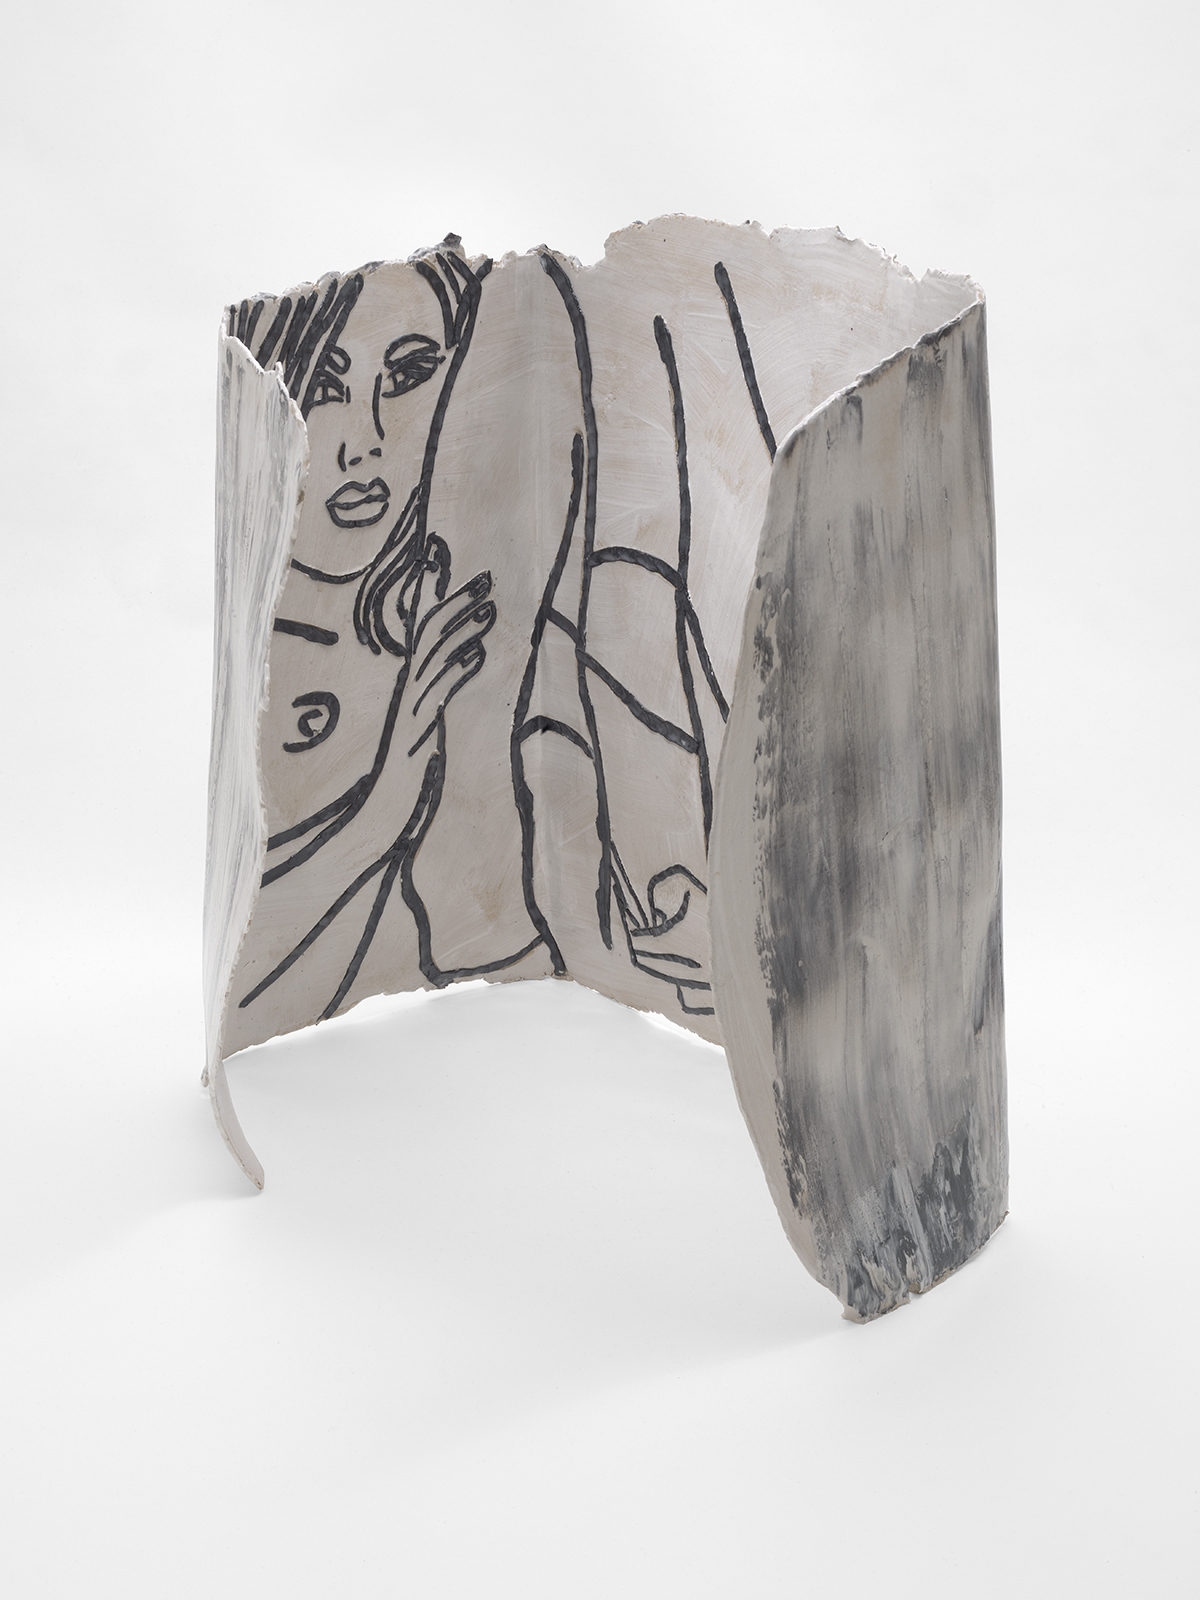 Ghada Amer

The Girl in the Box,&amp;nbsp;2015
Ceramic
61 x 53.3 x 45.7 cm / 24 x 21 x 18 in.

Enquire